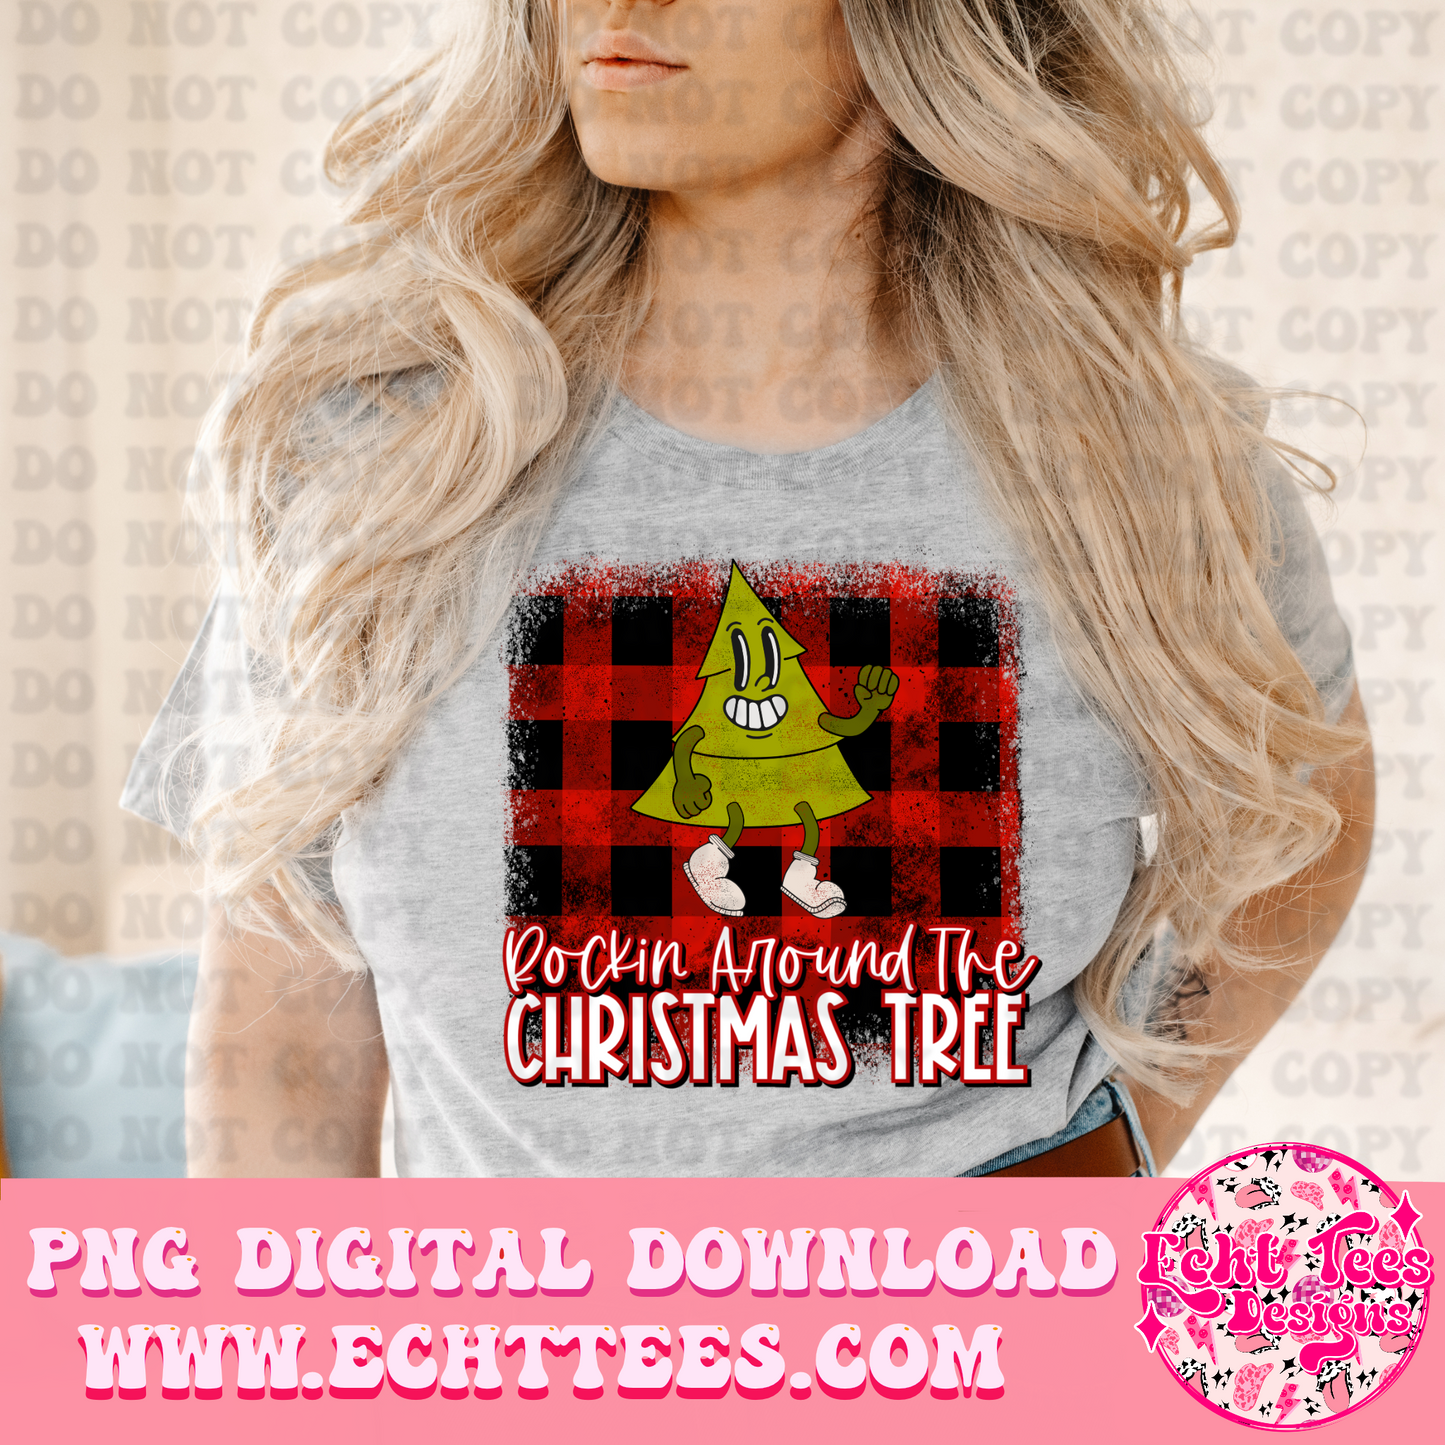 Rockin around the Christmas tree PNG Digital Download